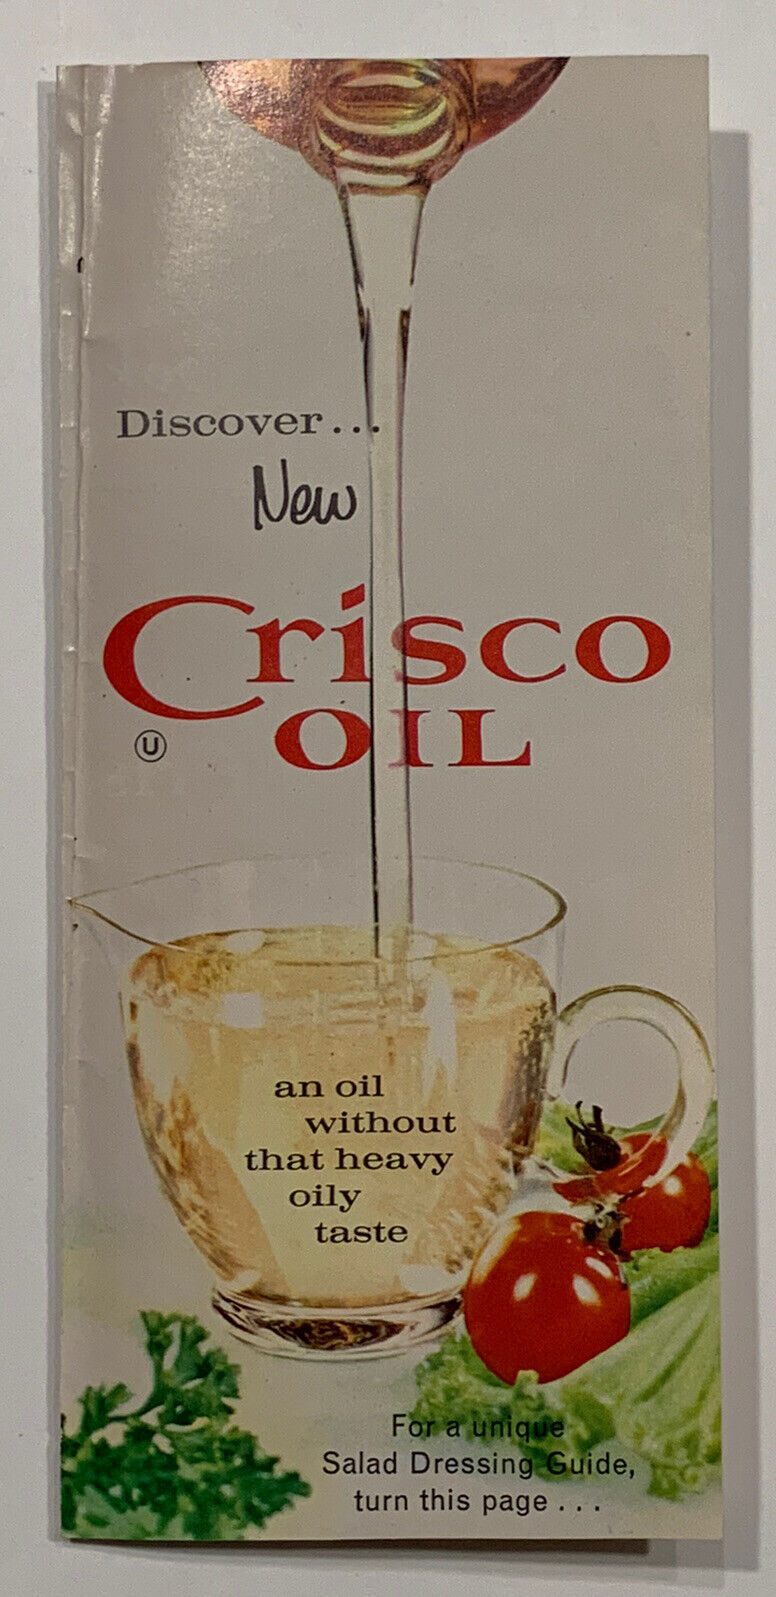 Vintage Brochure: 1962 CRISCO - Discover New Crisco Oil - Salad Dressing Guide